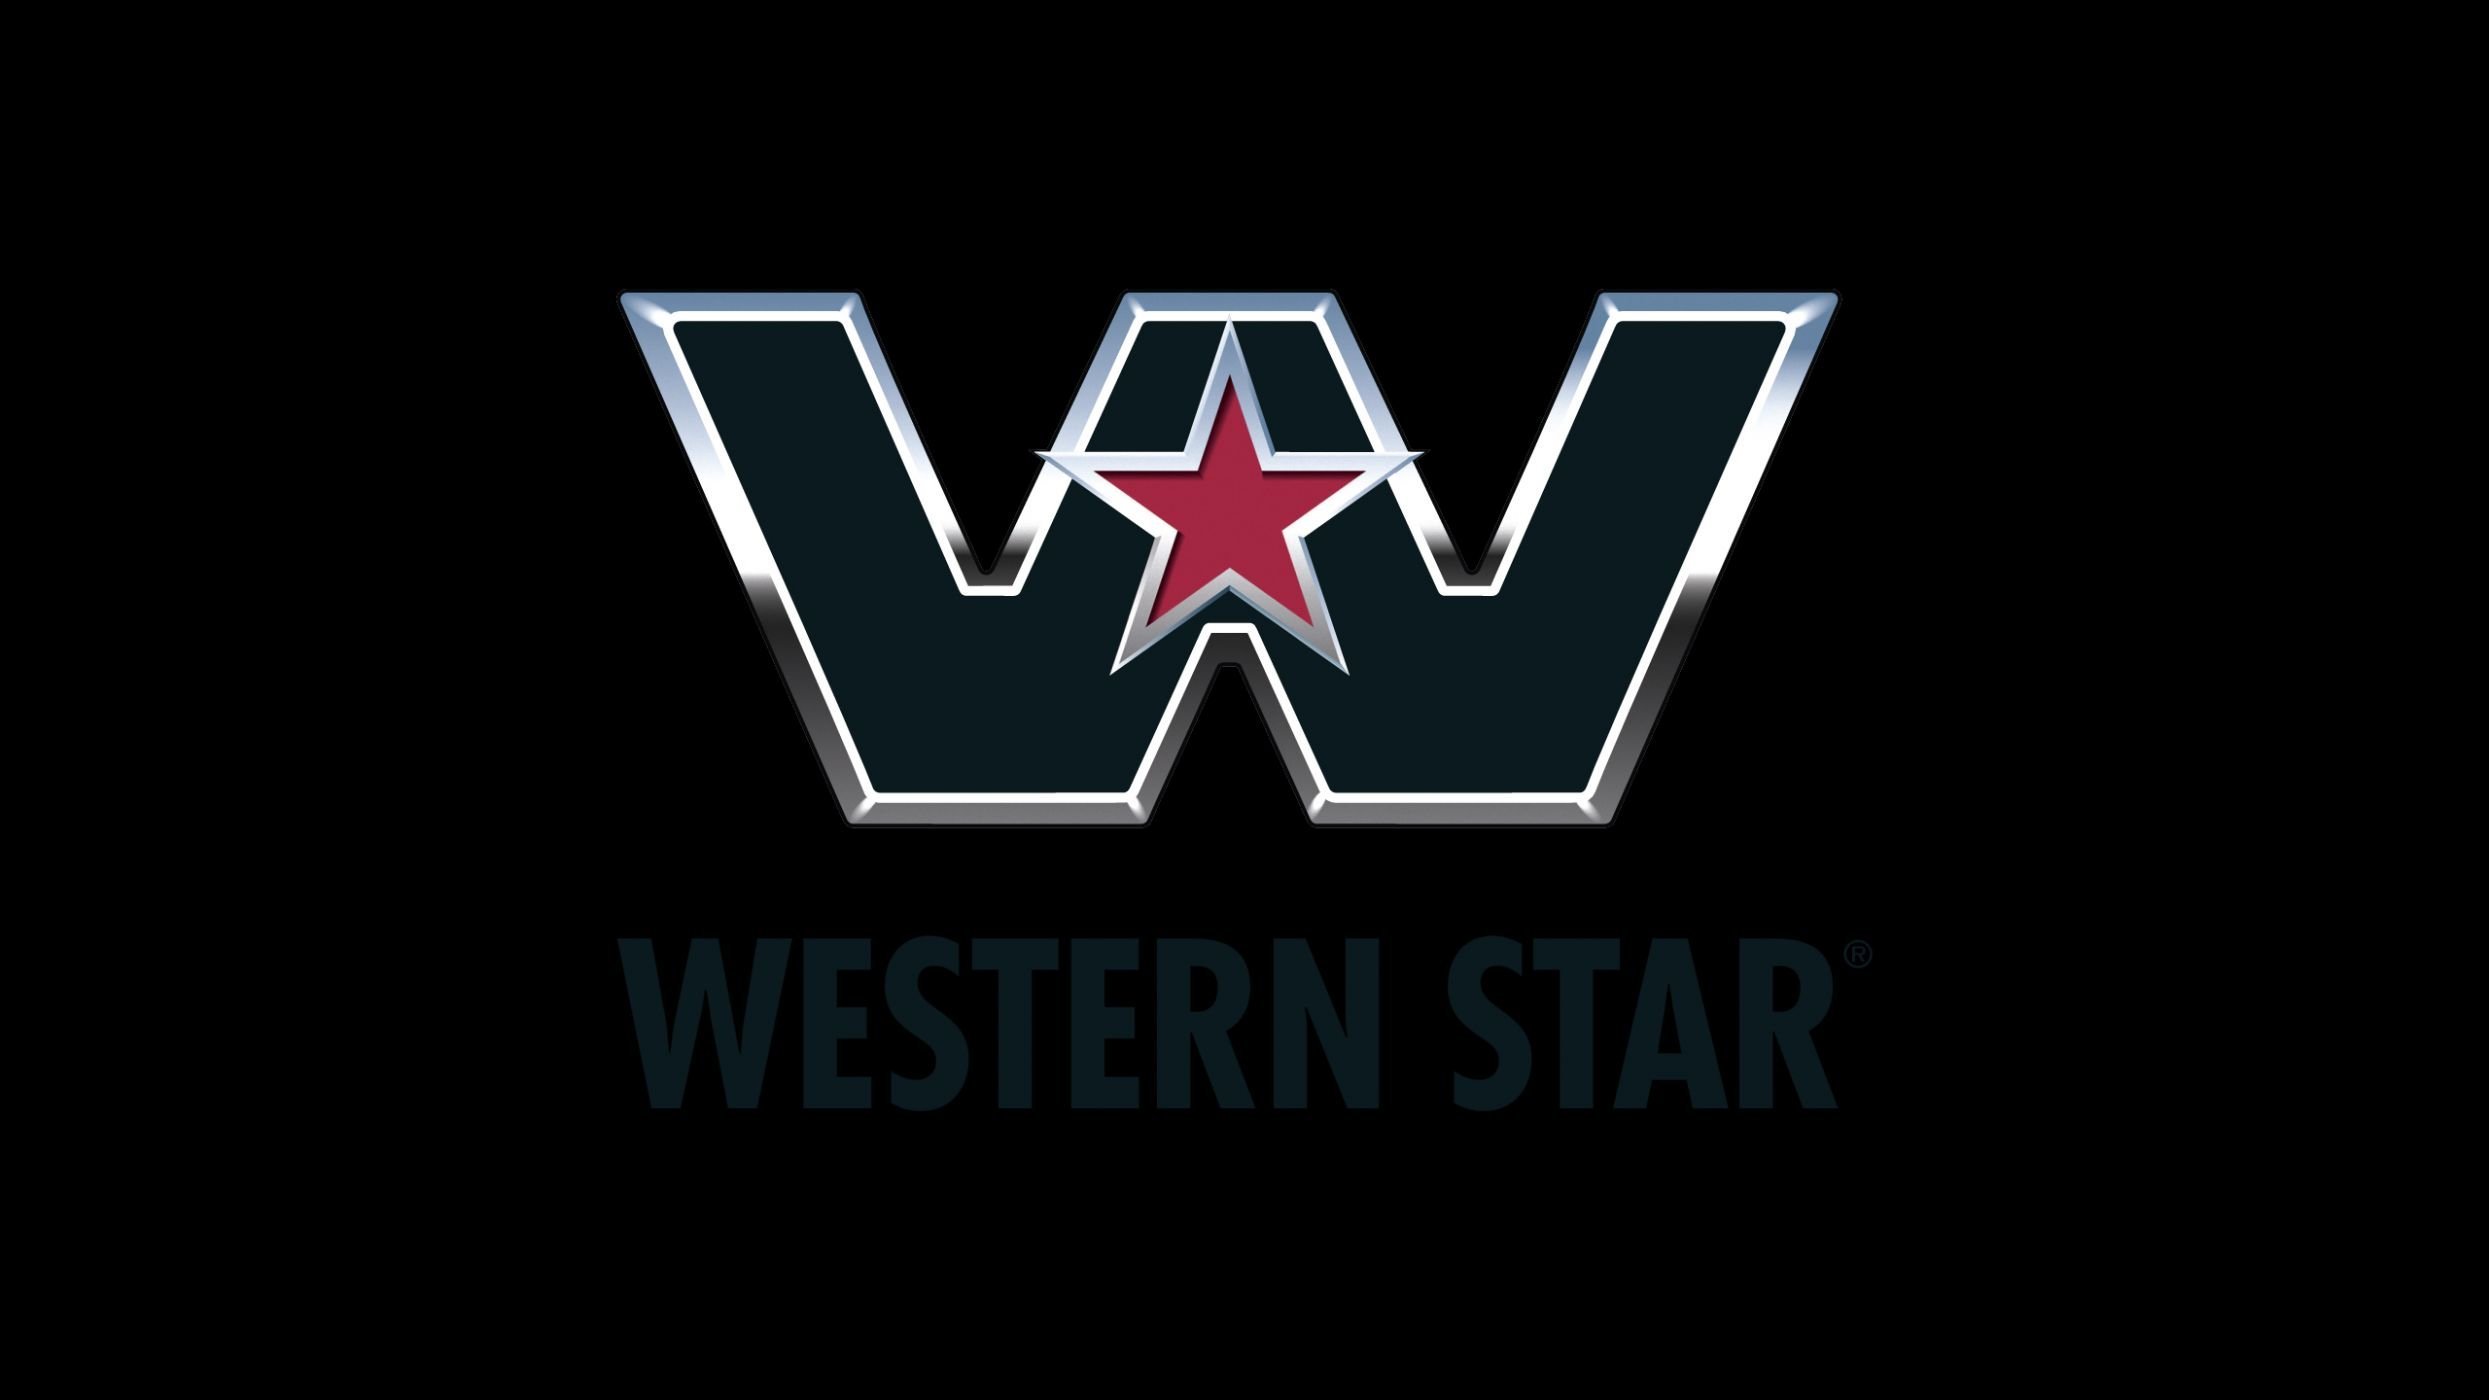 Значок машины звезда. Western Star логотип. Логотип звезда. Грузовик Western Star logo. Логотип машины со звездочками.